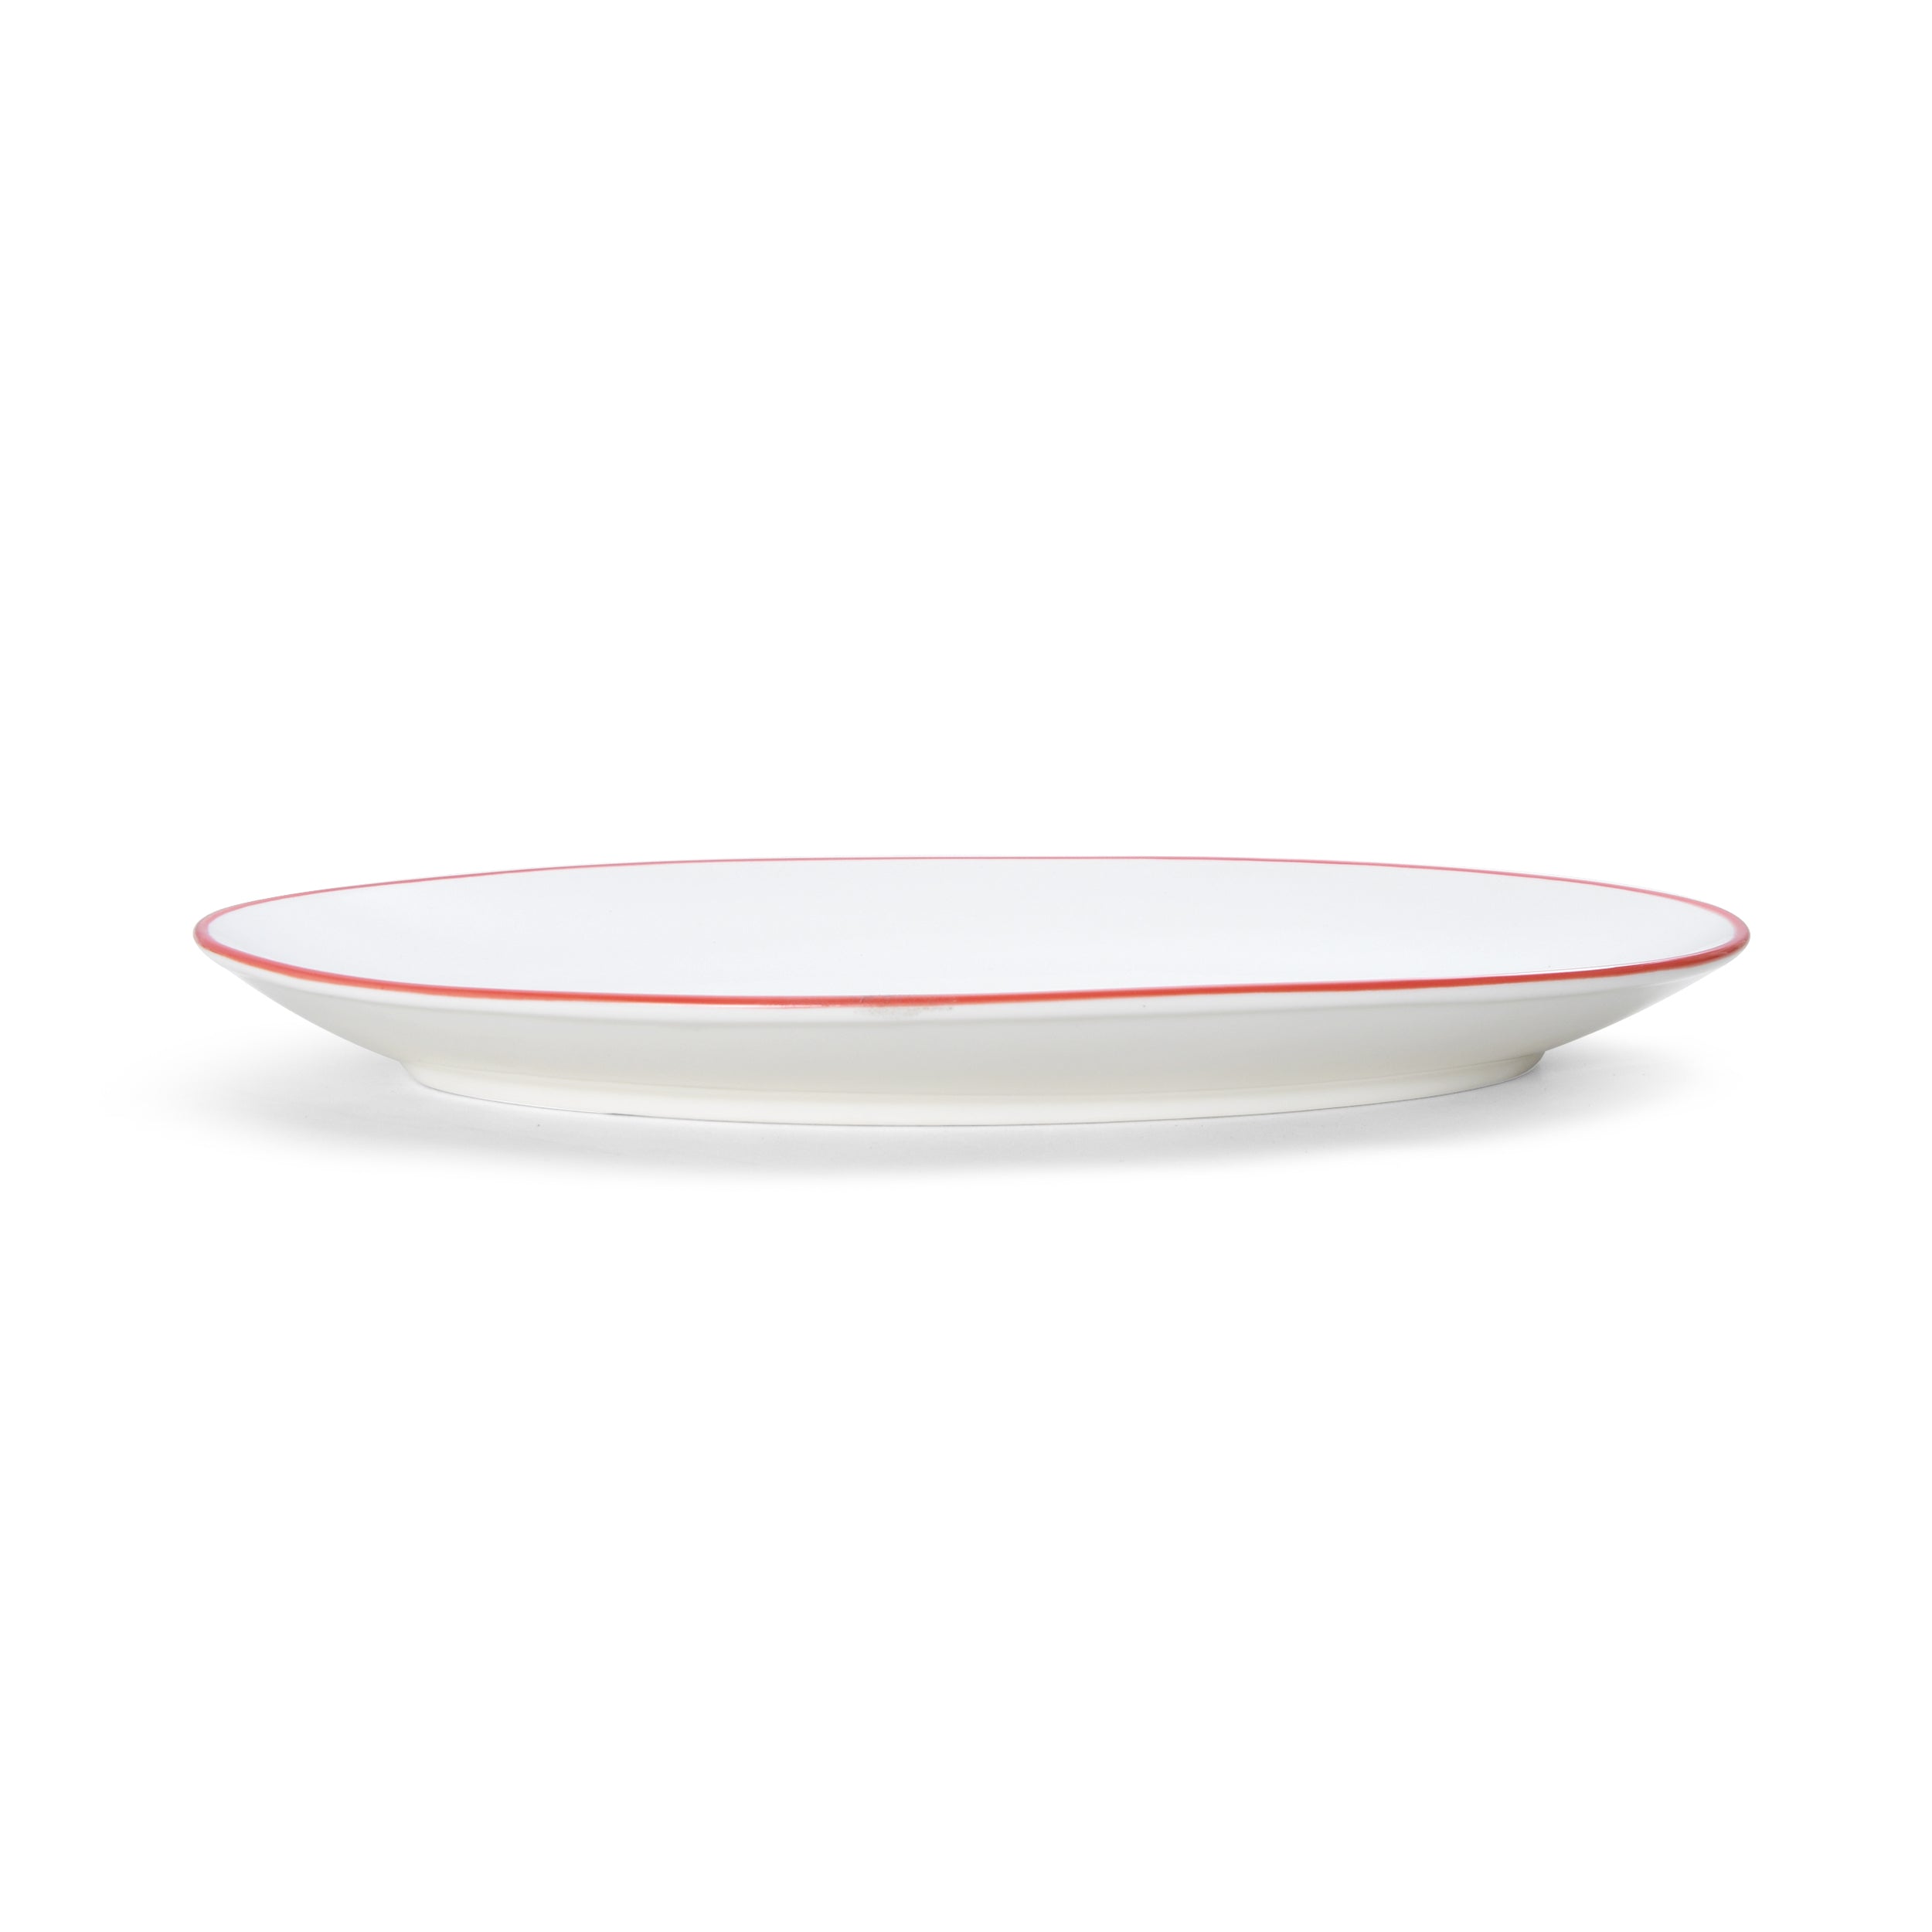 Bistro Pinstripe Porcelain Oval Platter 13x8" Red Pinstripe #color_red pinstripe